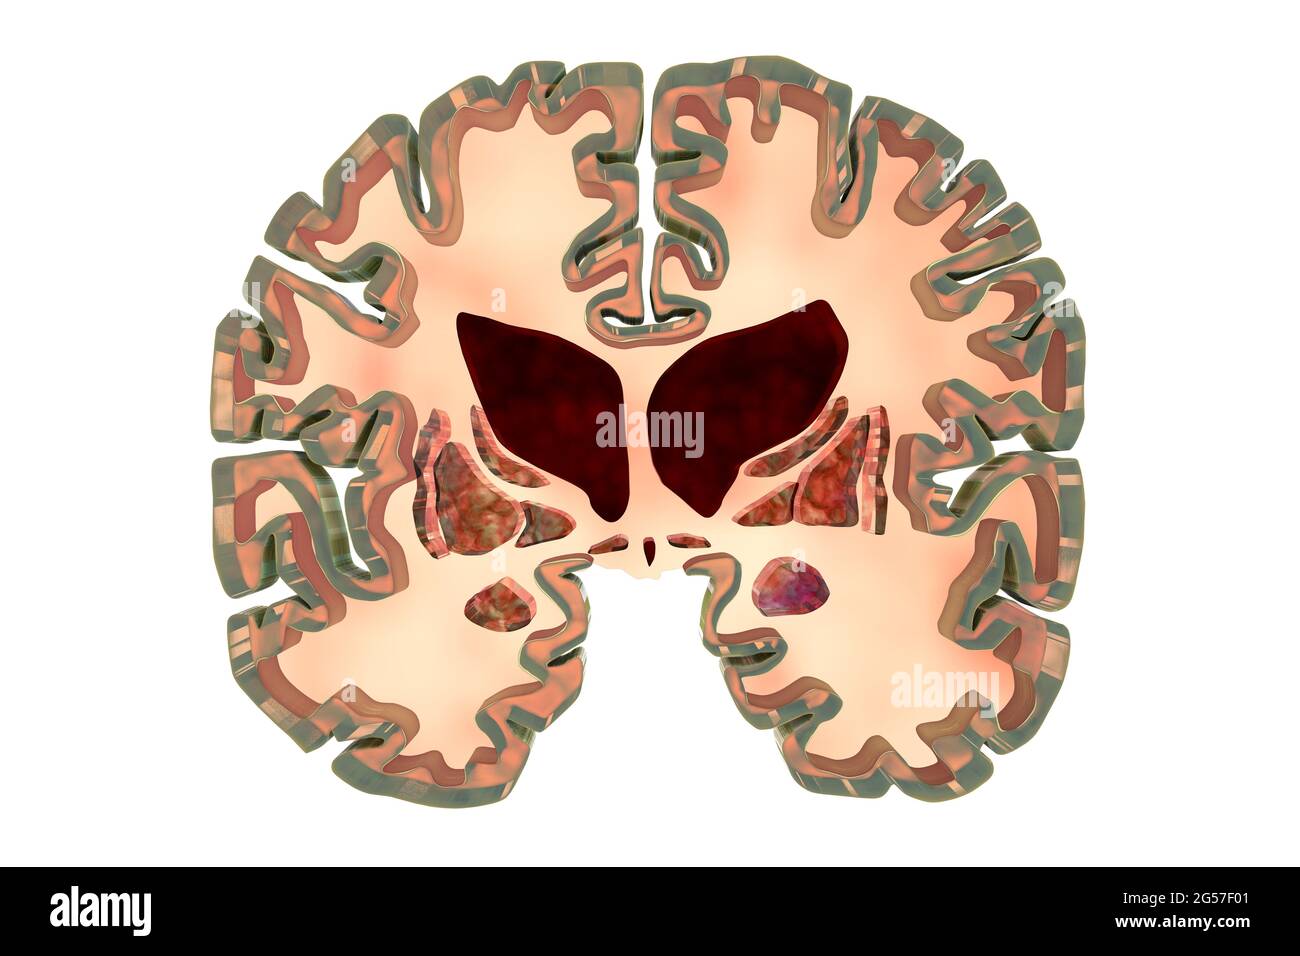 Brain in Huntington's disease, illustration Stock Photo